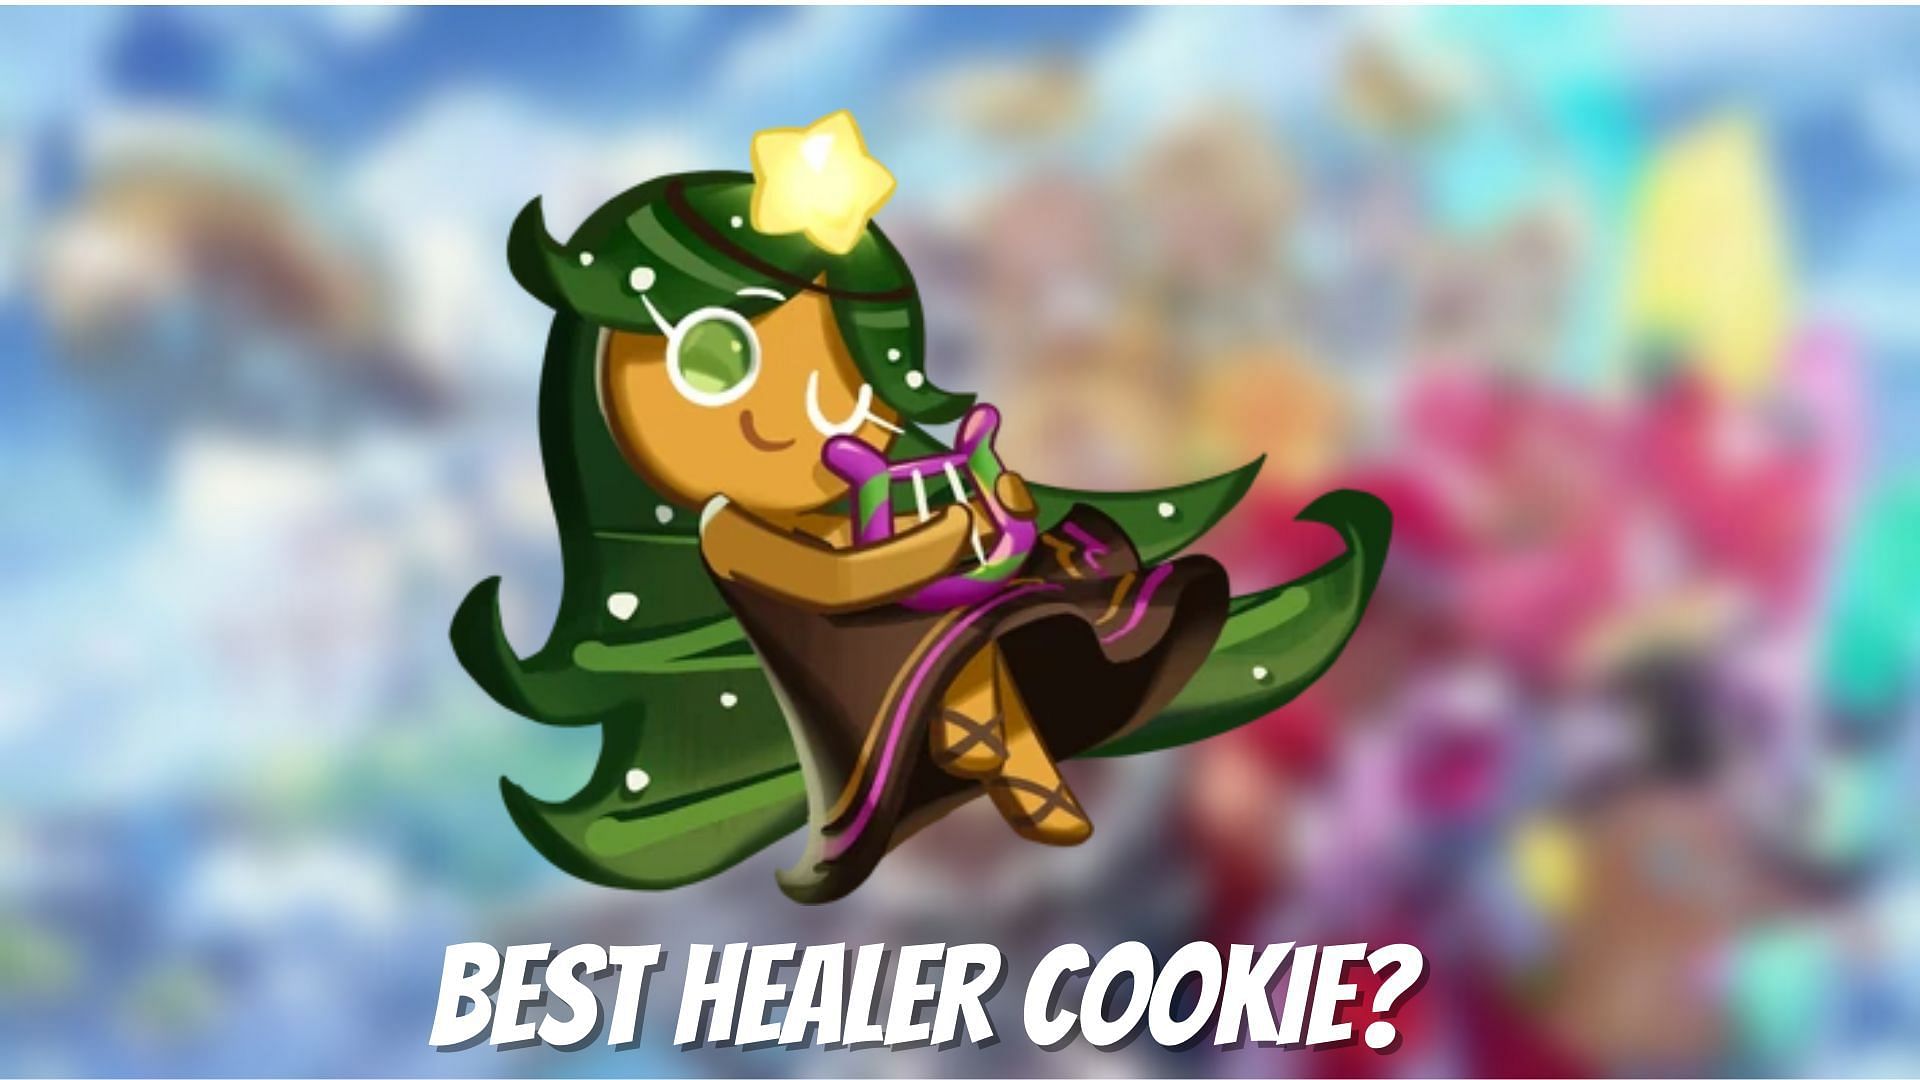 Carol is the 7th Healer to be added to Cookie Run: Kingdom (Image via Sportskeeda)